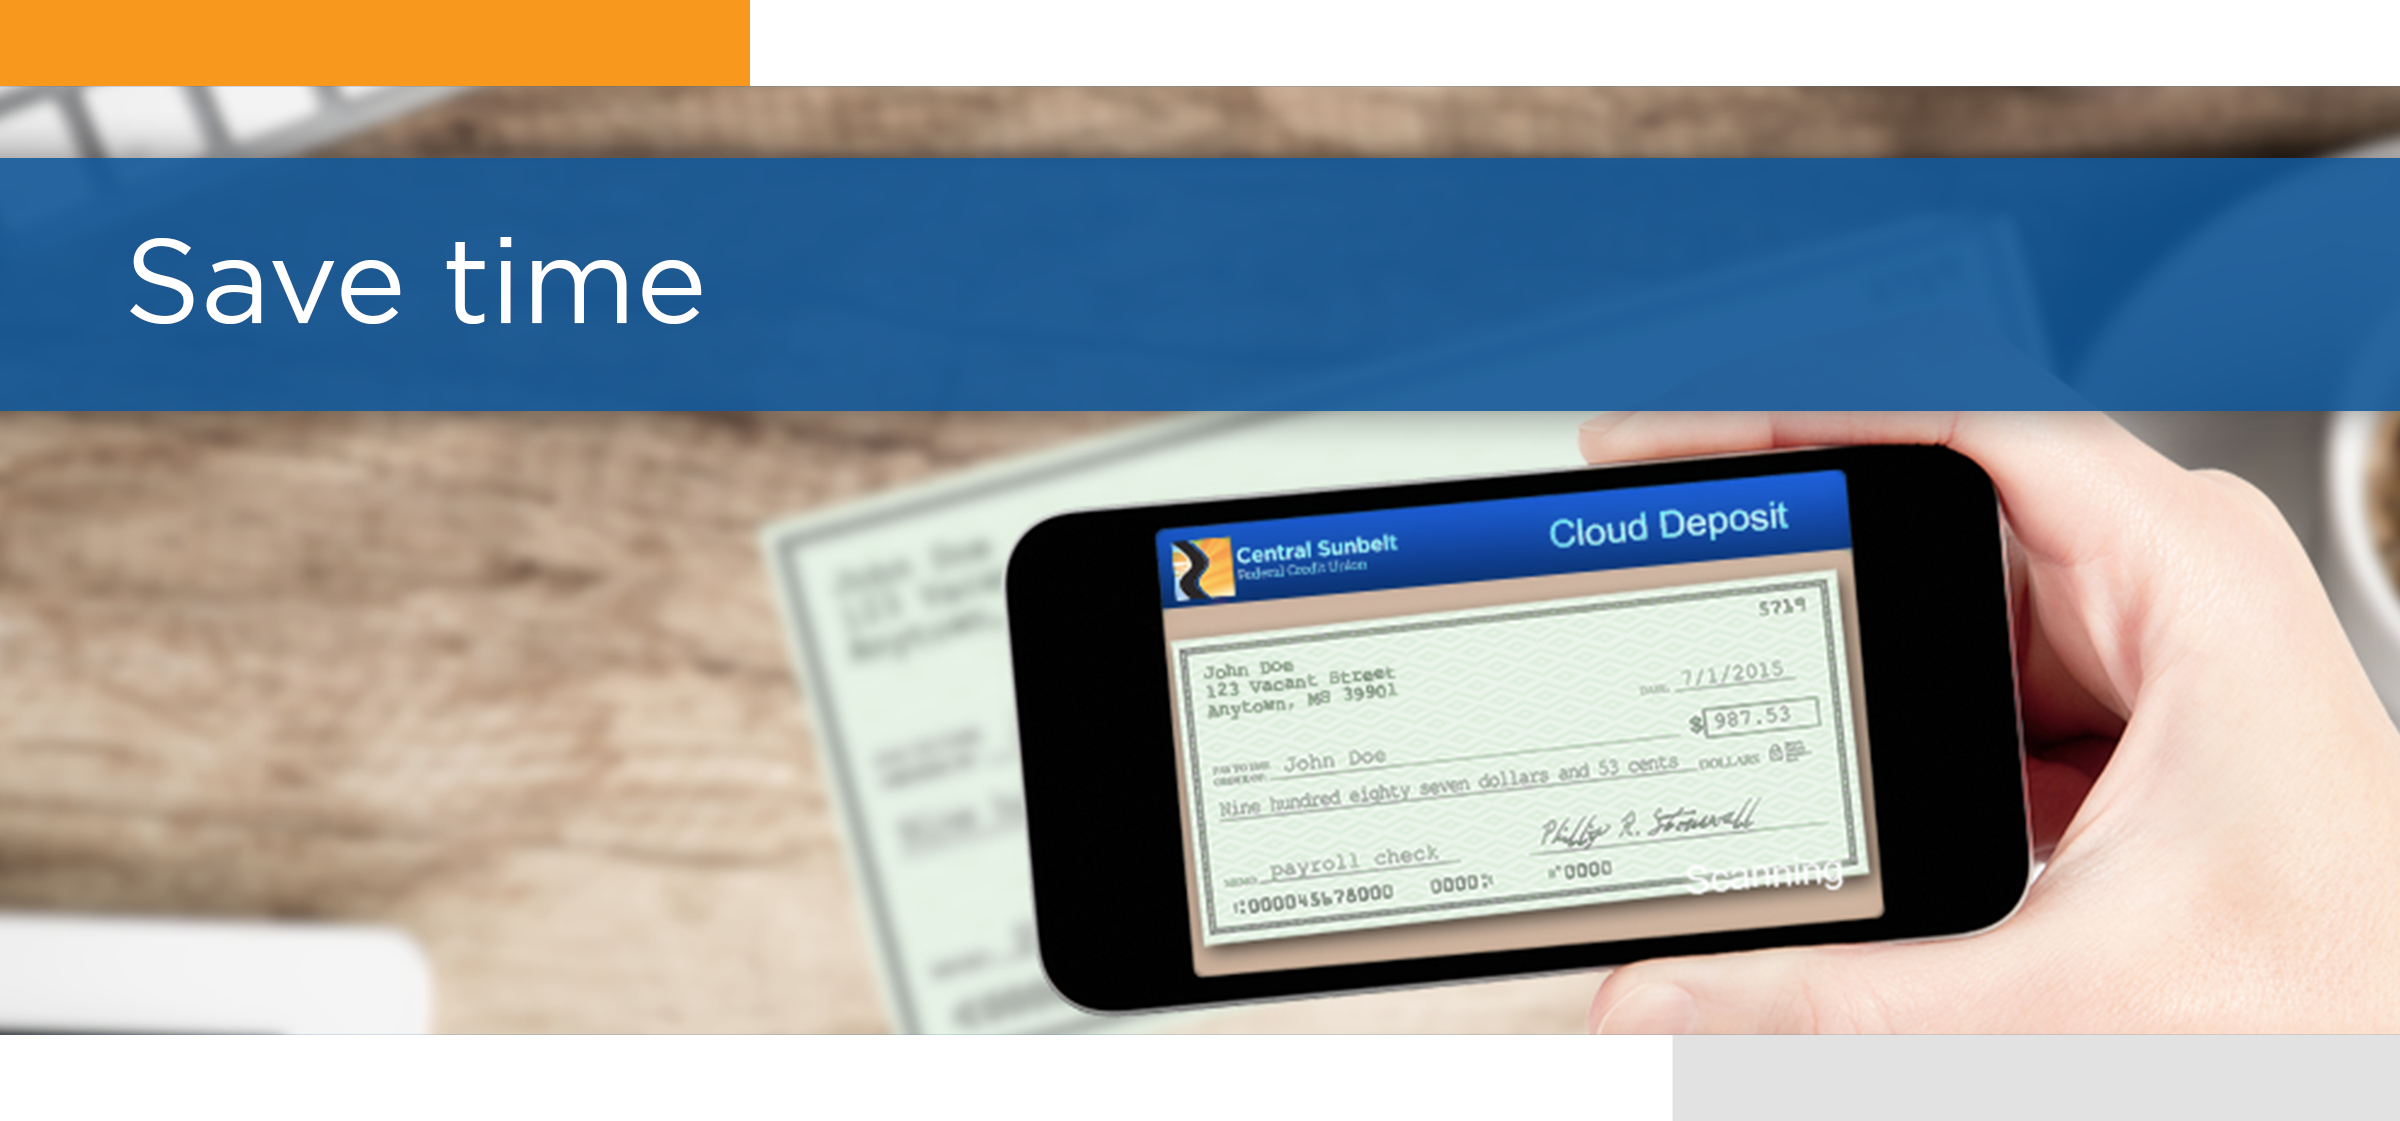 Deposit your check using your mobile phone with Cloud Deposit inside the Sunbelt Cloud Branch App at Central Sunbelt FCU